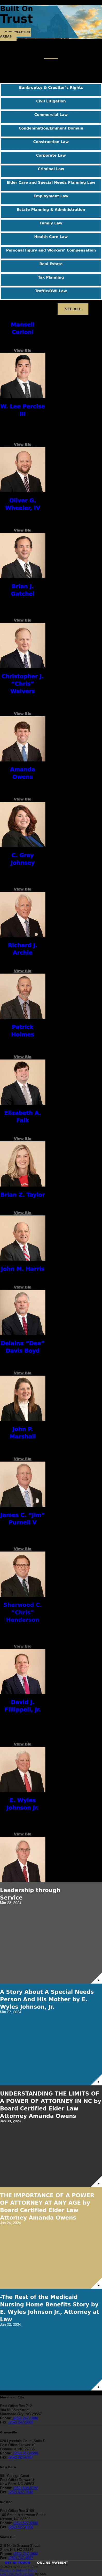 White & Allen, P.A. - Snow Hill NC Lawyers